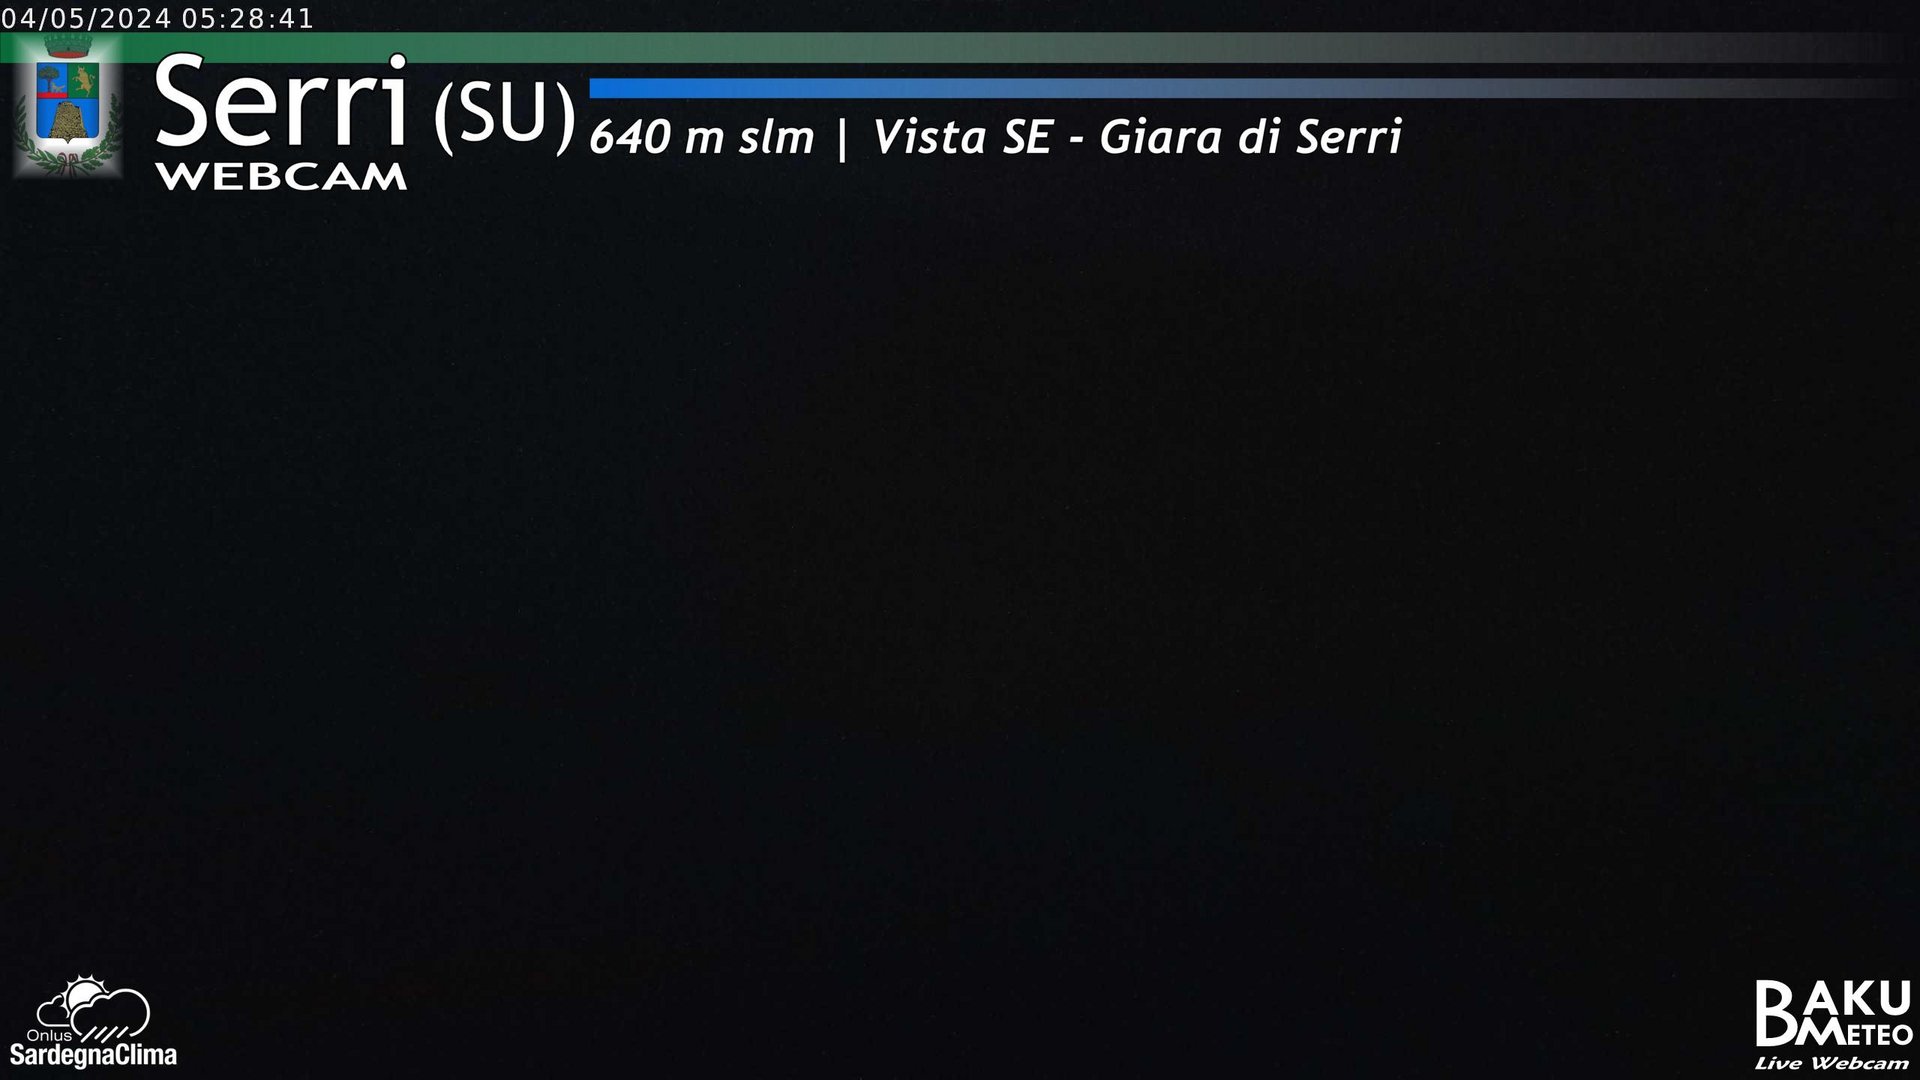 time-lapse frame, Serri webcam